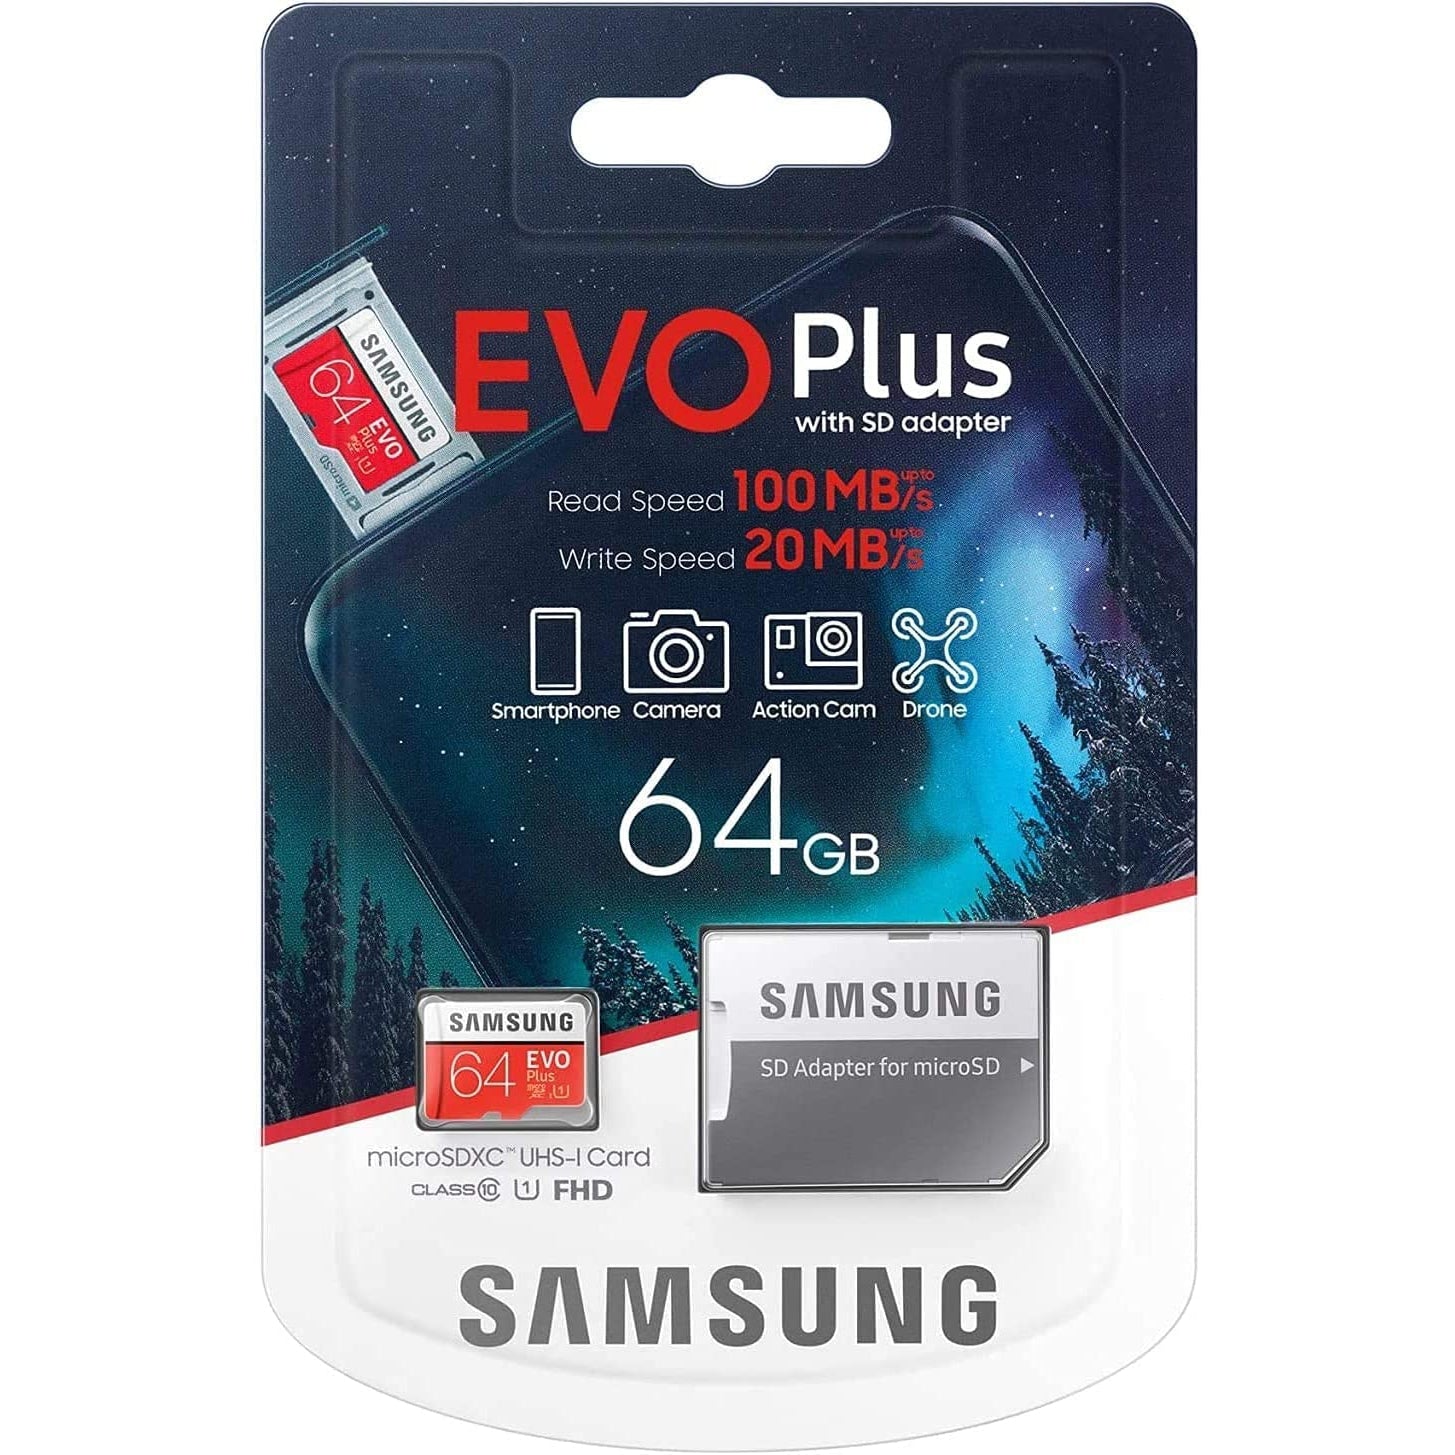 Samsung EVO Plus - 64GB Memory Card